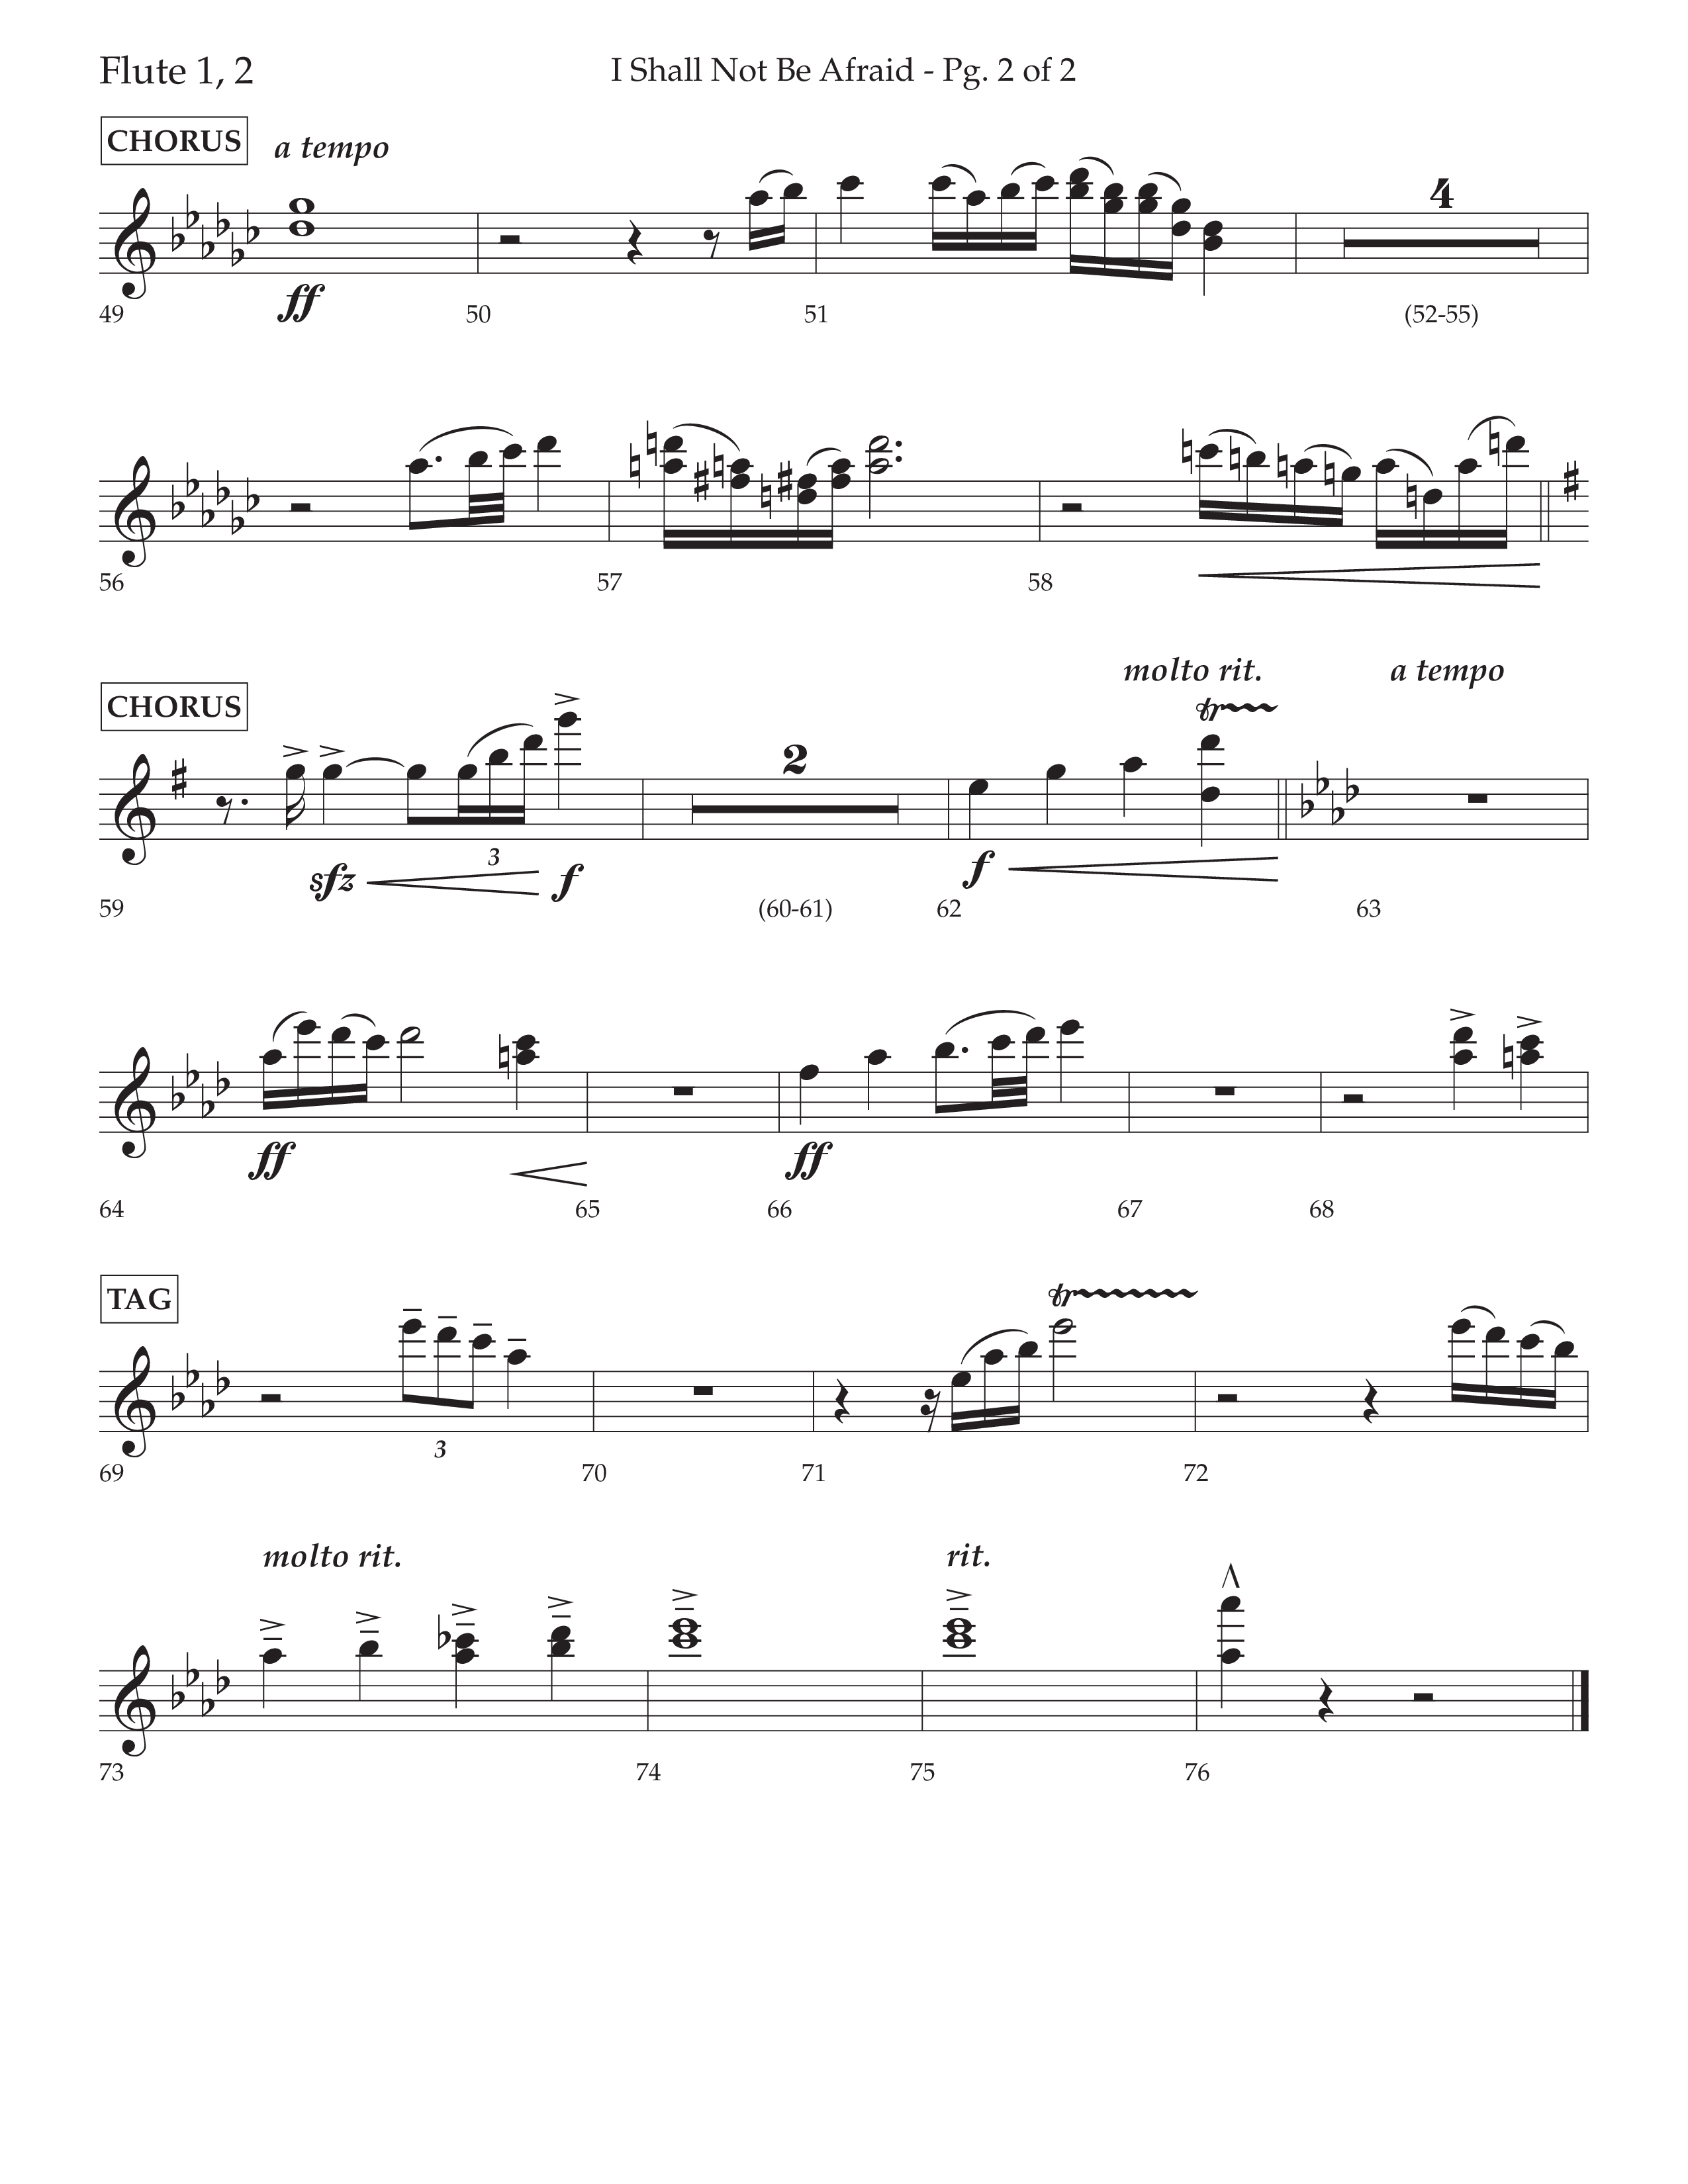 I Shall Not Be Afraid (Choral Anthem SATB) Flute 1/2 (Lifeway Choral / Arr. Cliff Duren)